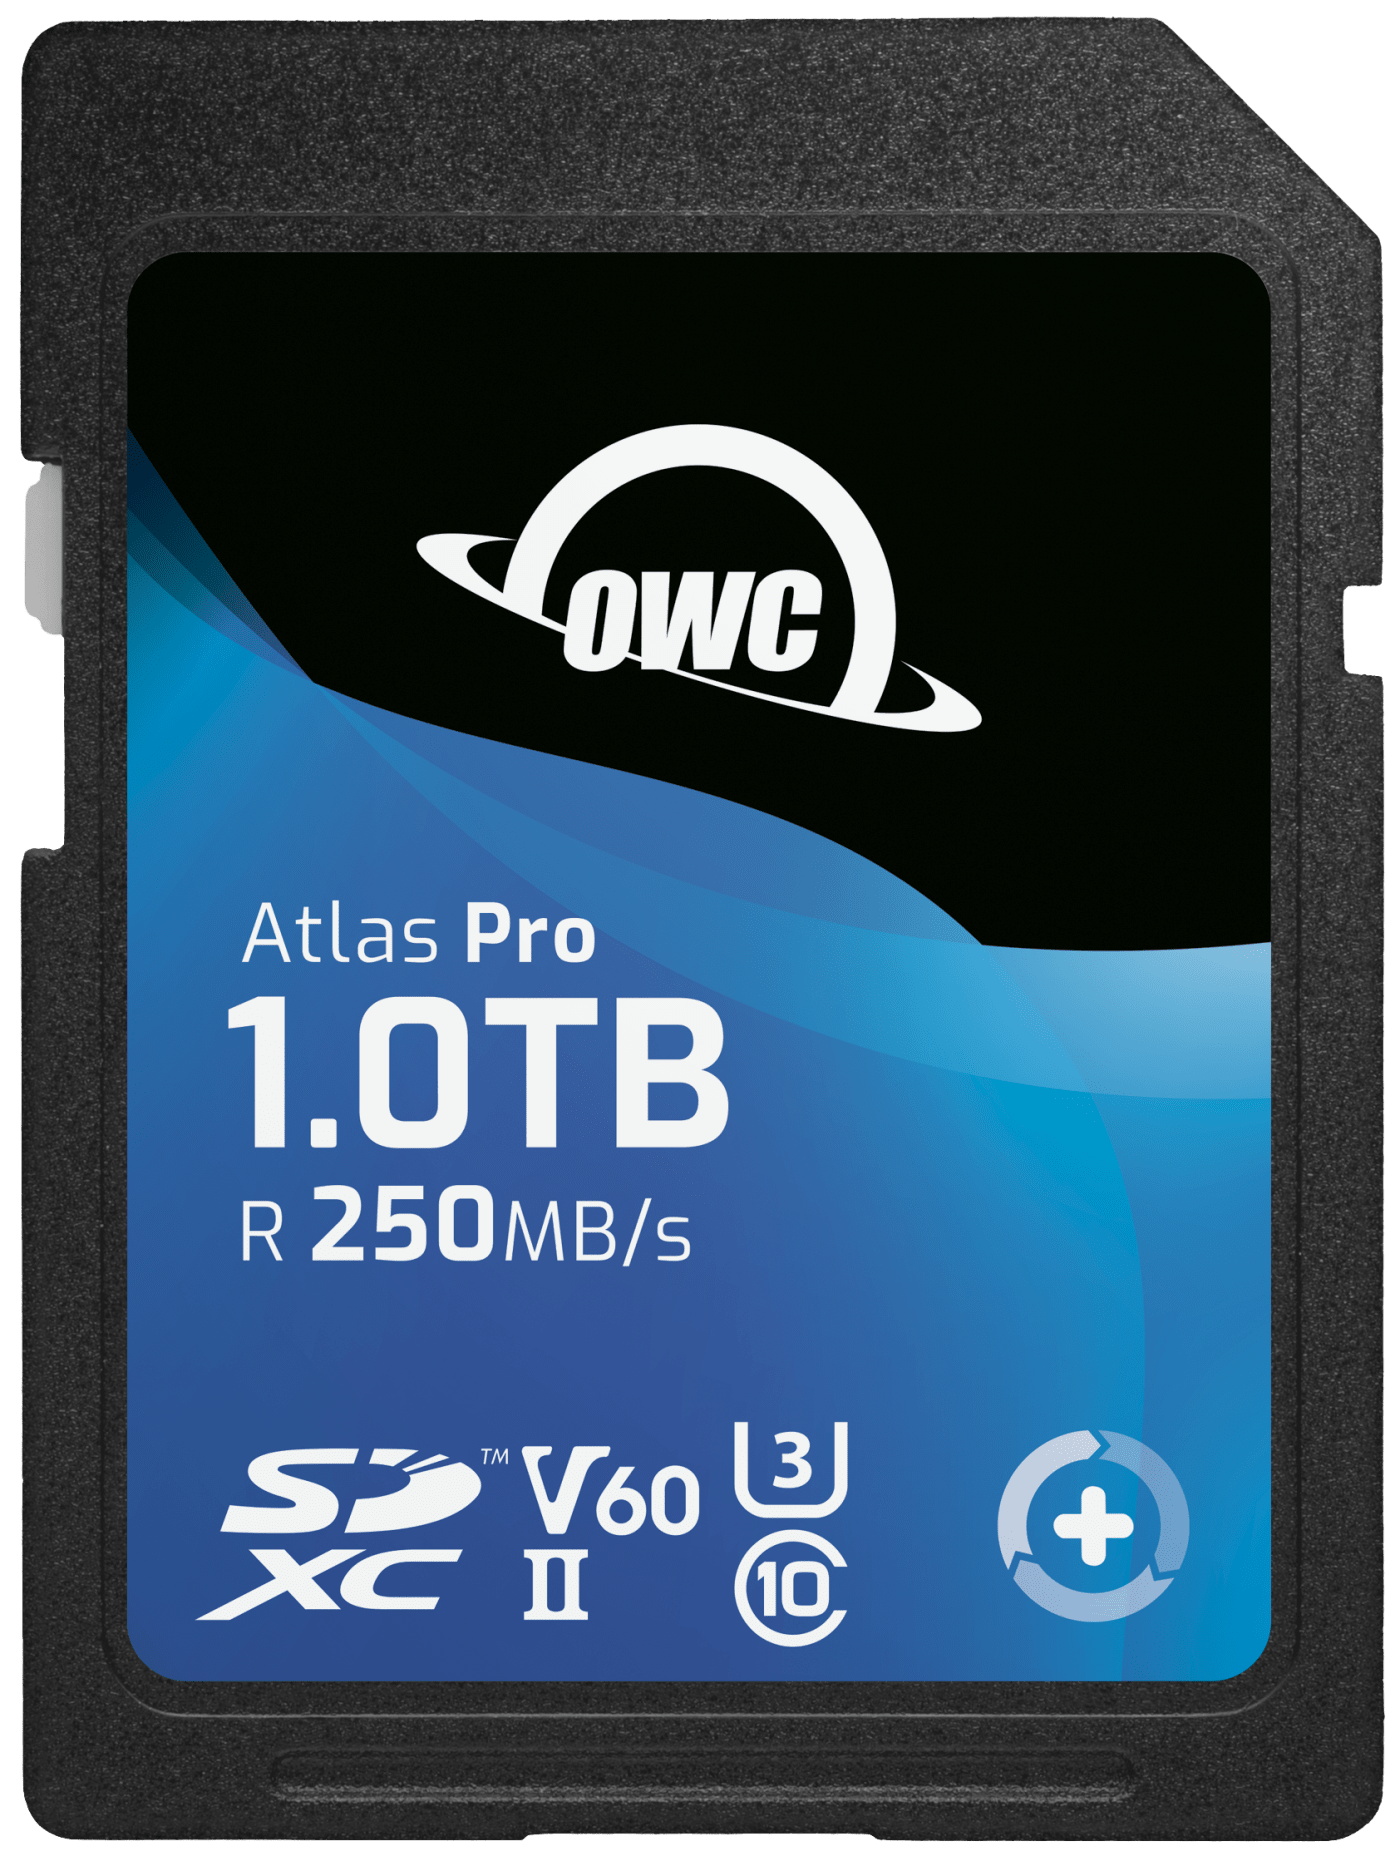 1.0TB OWC Atlas Pro SD V60 Memory Card